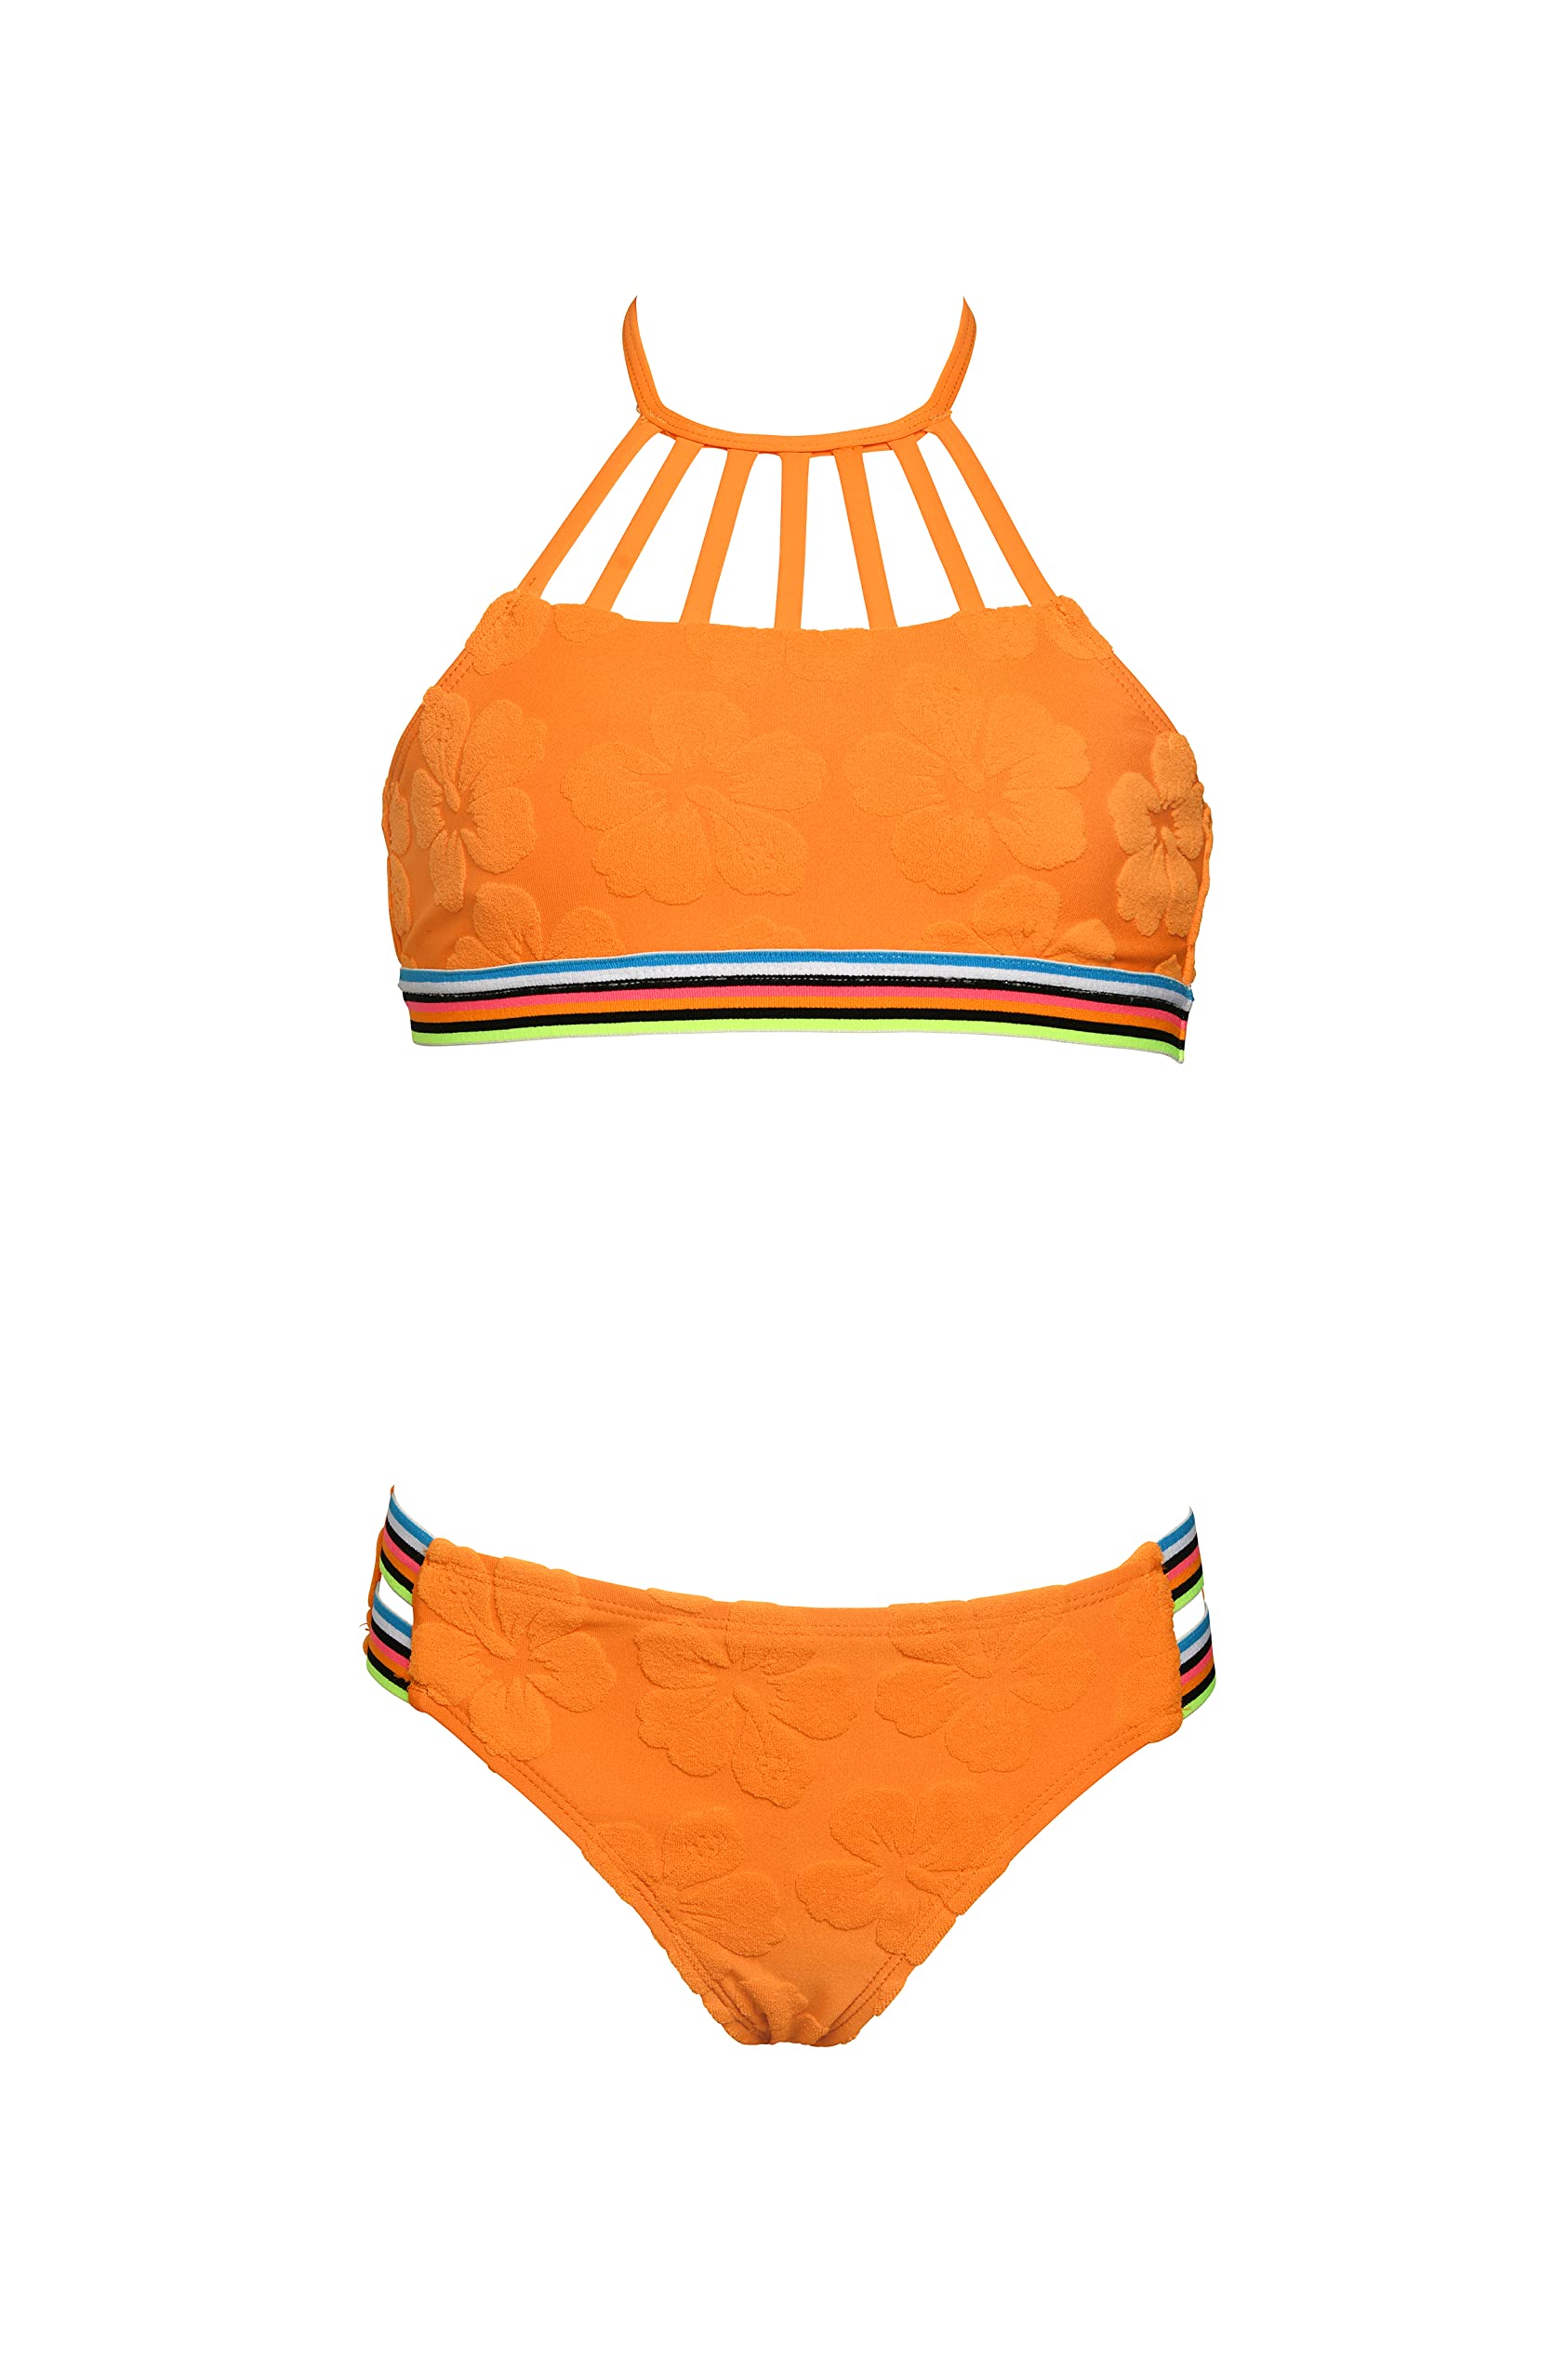 Hobie Girls Hi Neck Crop Bra Bikini Top & Banded Bottom Swimsuit Set